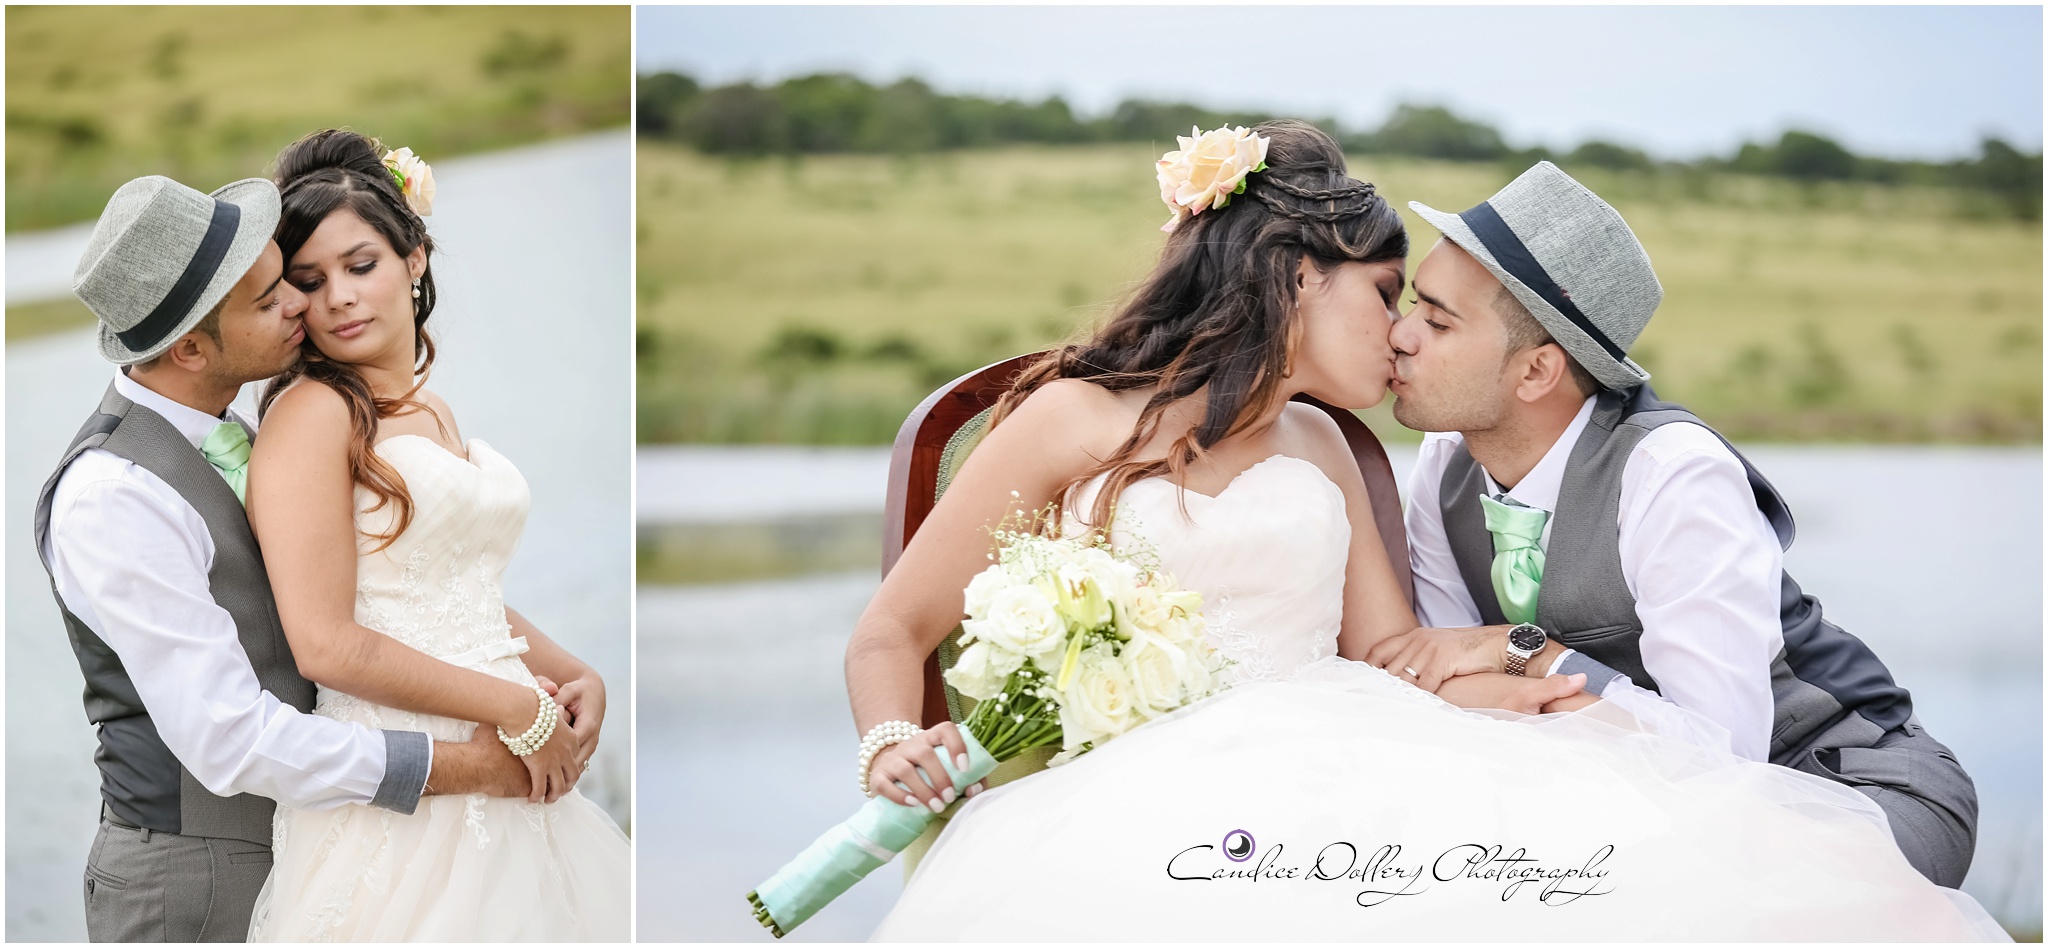 Paula & Jaycee's Wedding - Cypress Dale - Candice Dollery Photography_3109